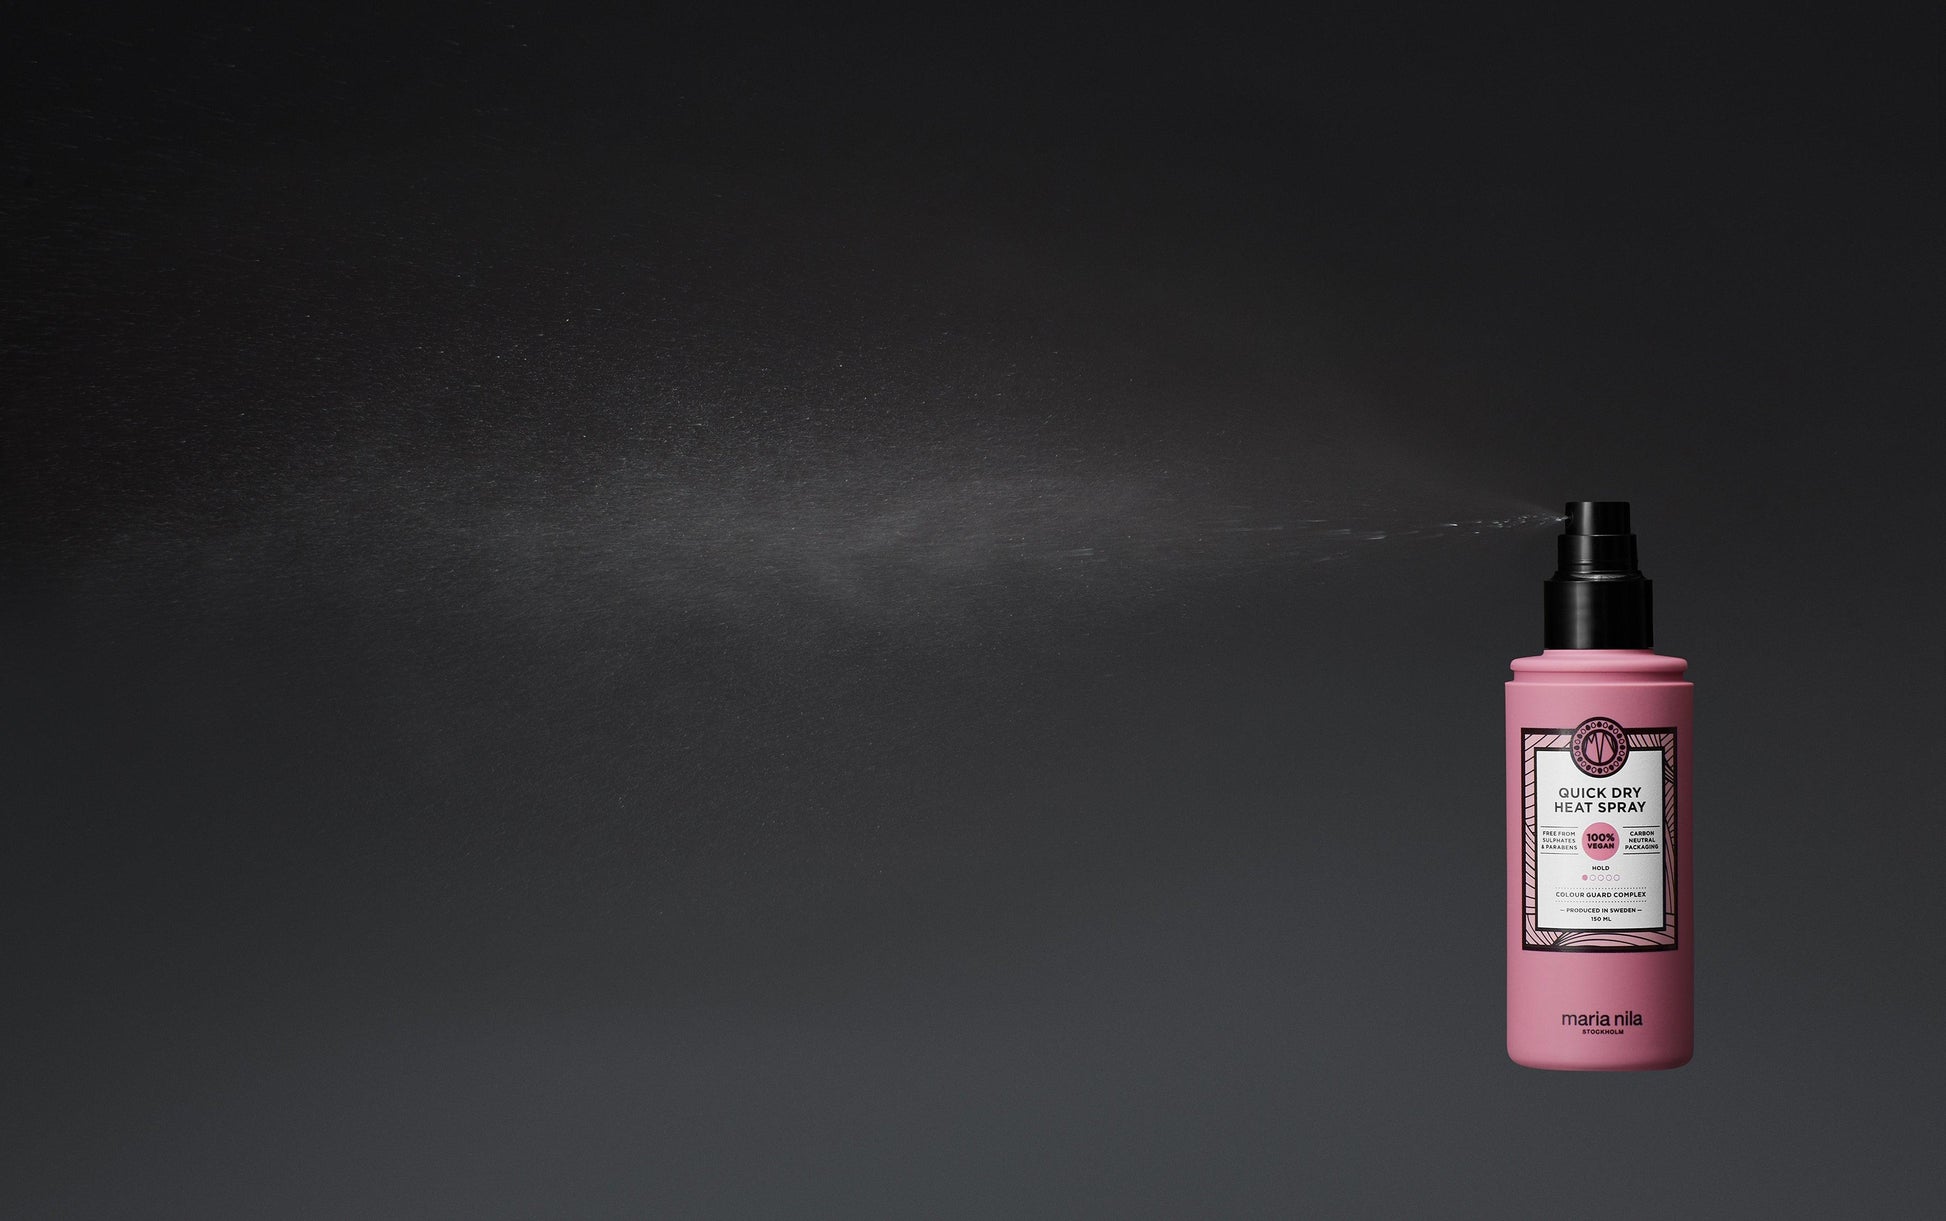 Quick Dry Heat Spray - The Coloroom 